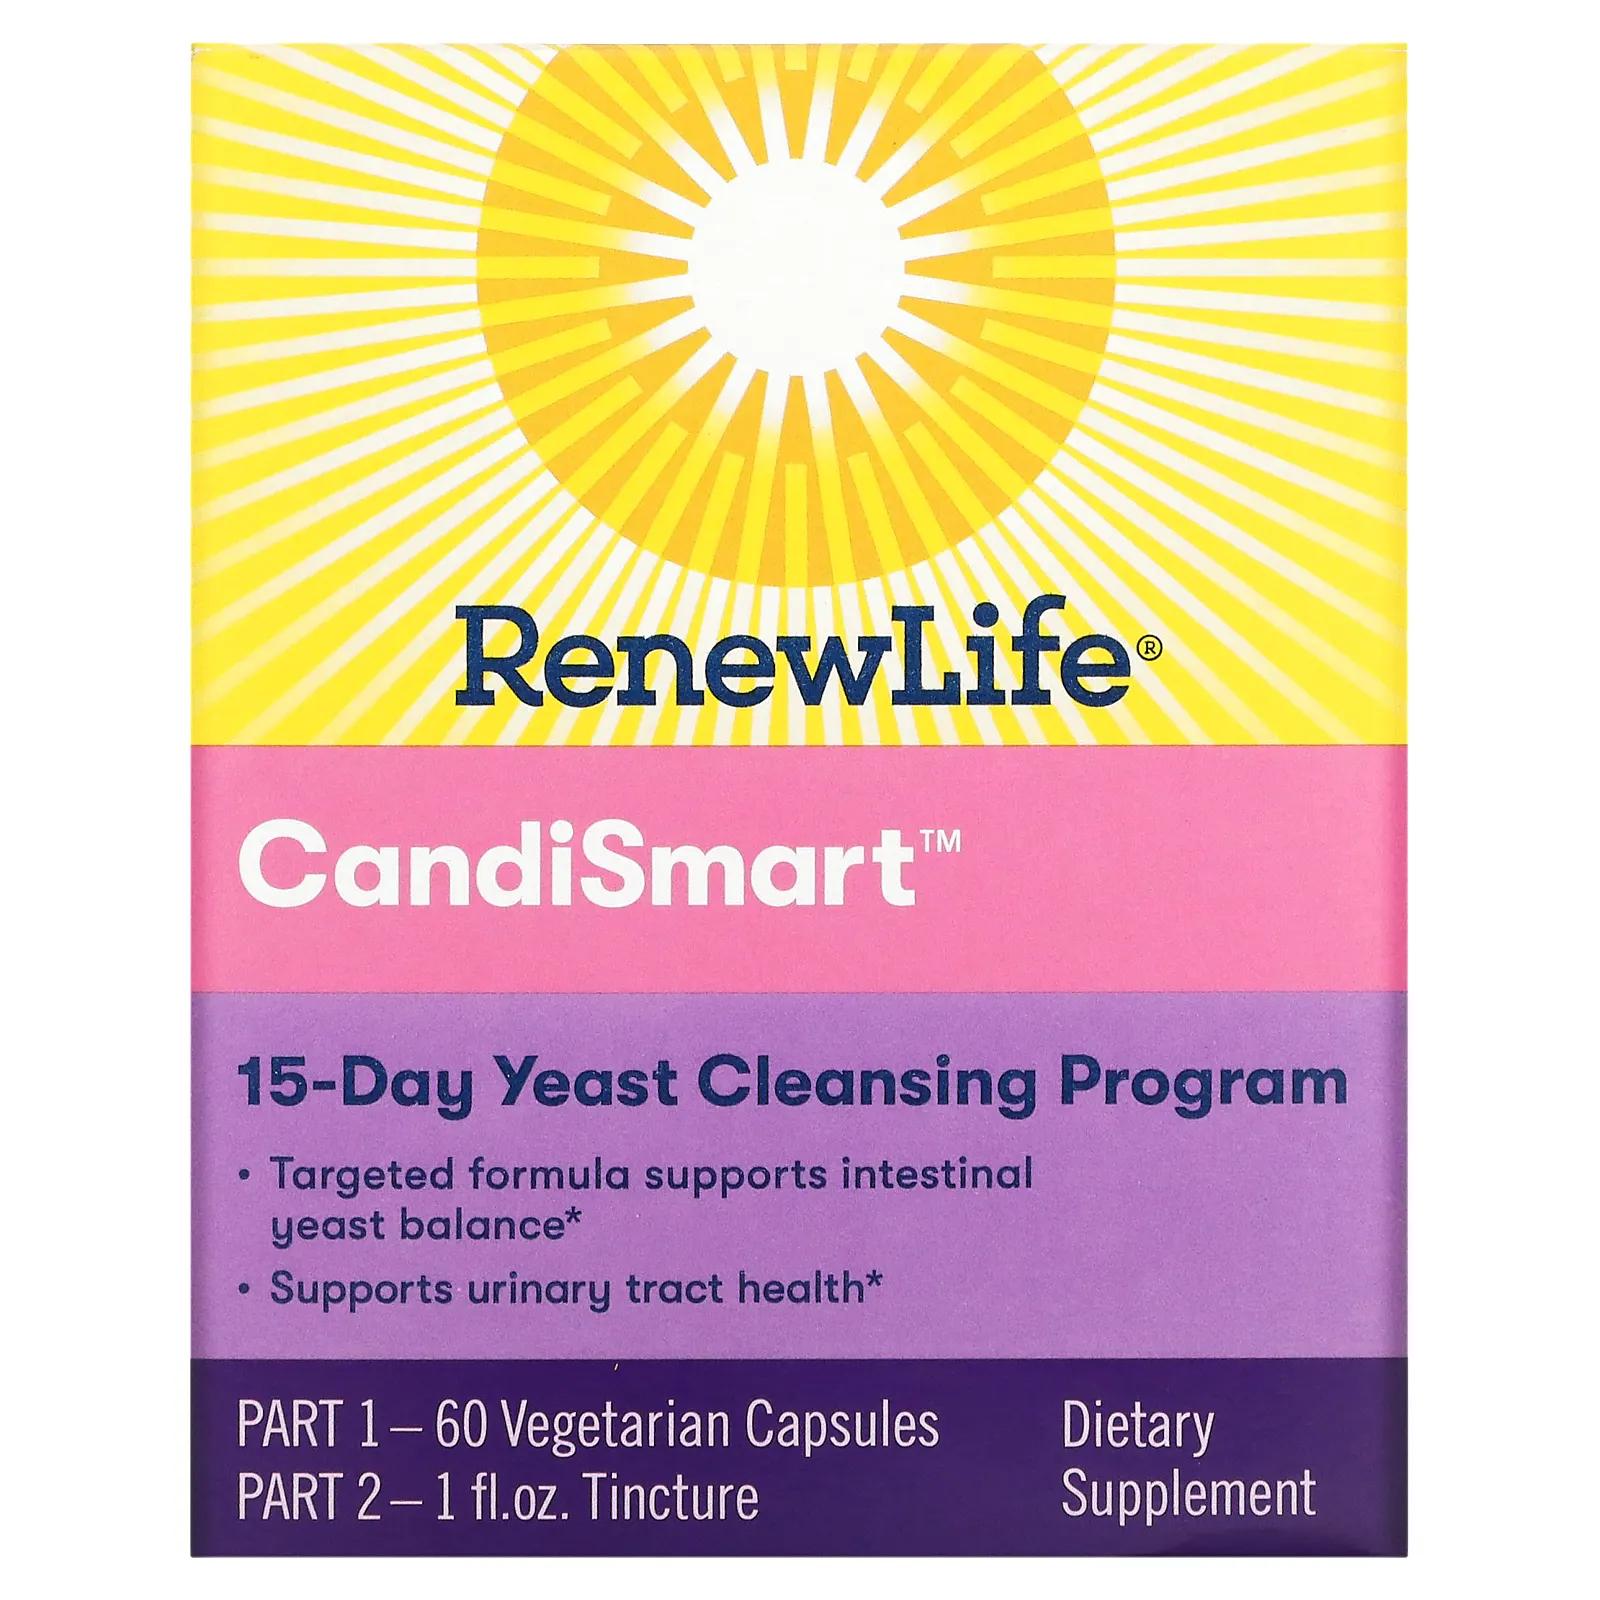 Renew Life Целевая Candi Smart очищающая дрожжевая формула 15-дневная программа 2-компонентная программа renew life ultimate